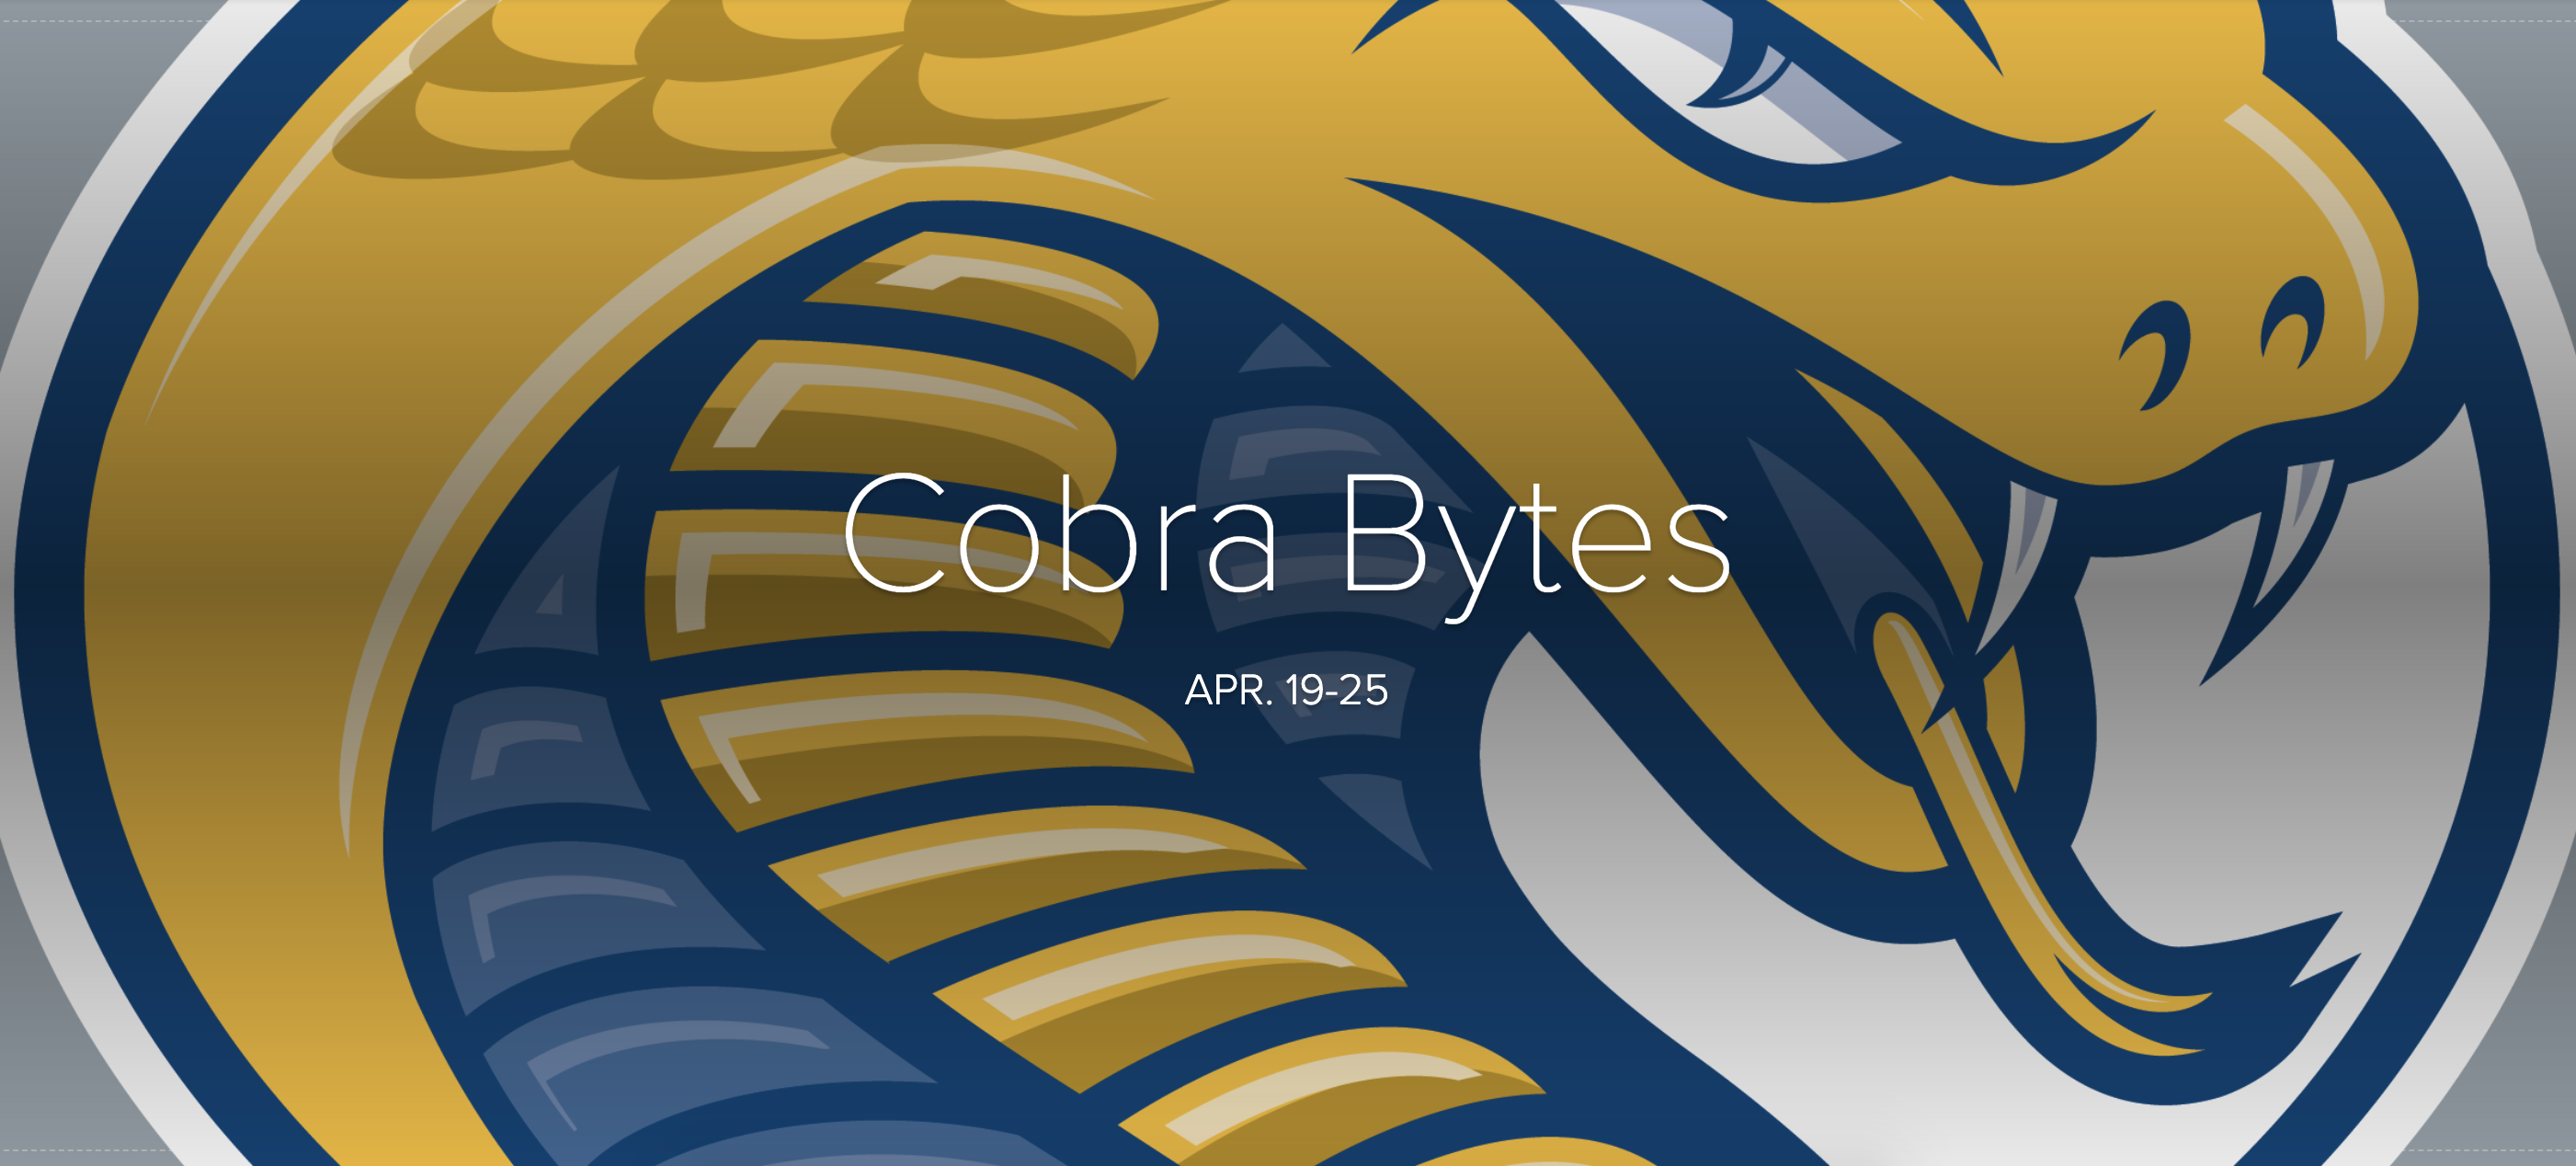 Cobra Bytes Apr. 19-25